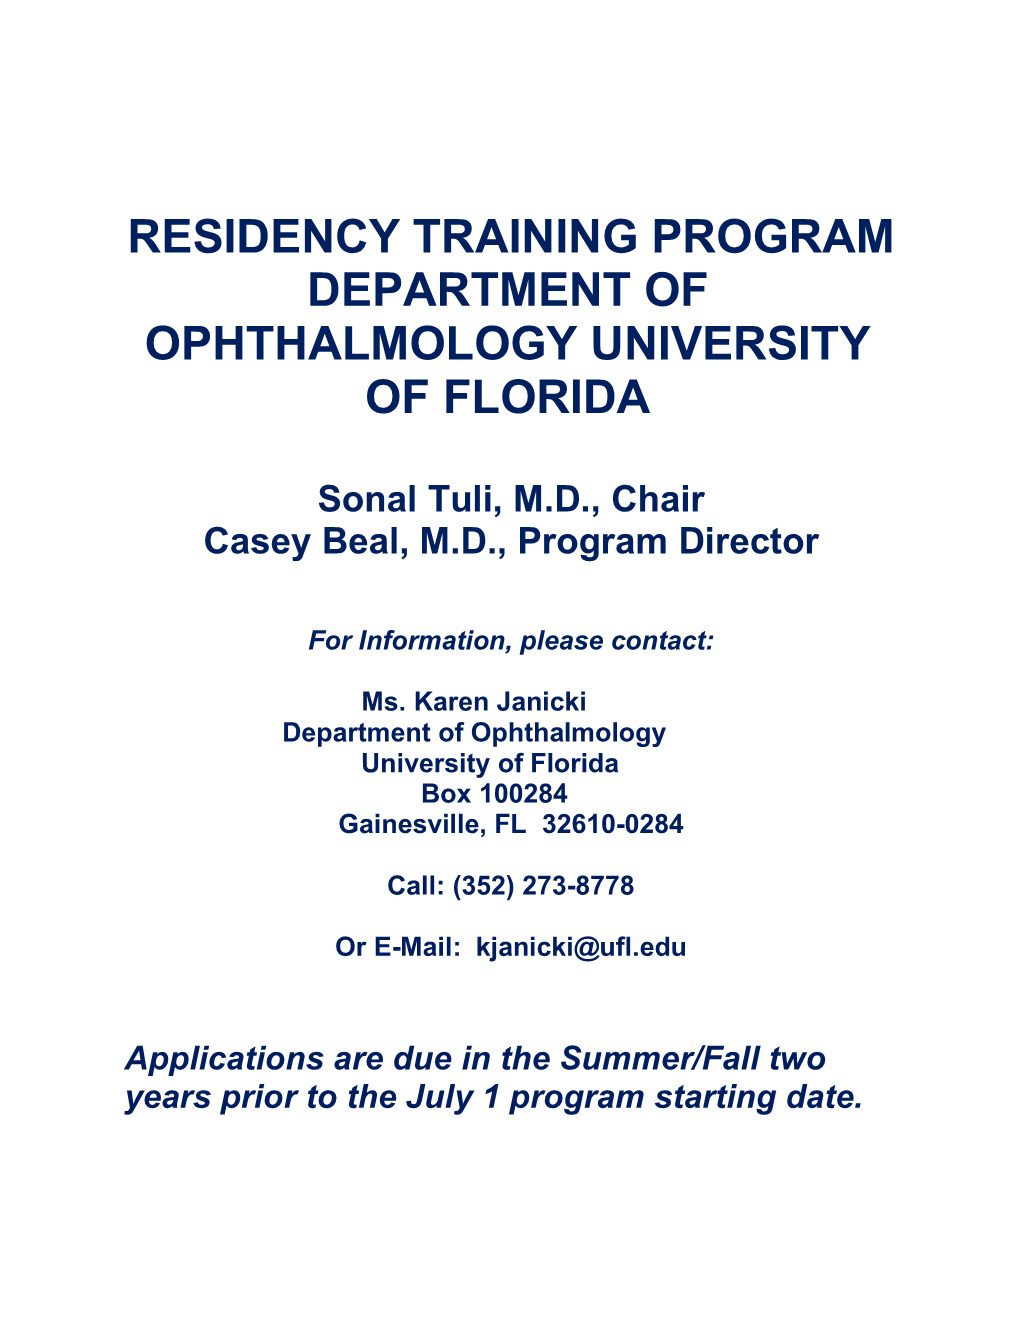 Residency Training Program Department of Ophthalmology University of Florida